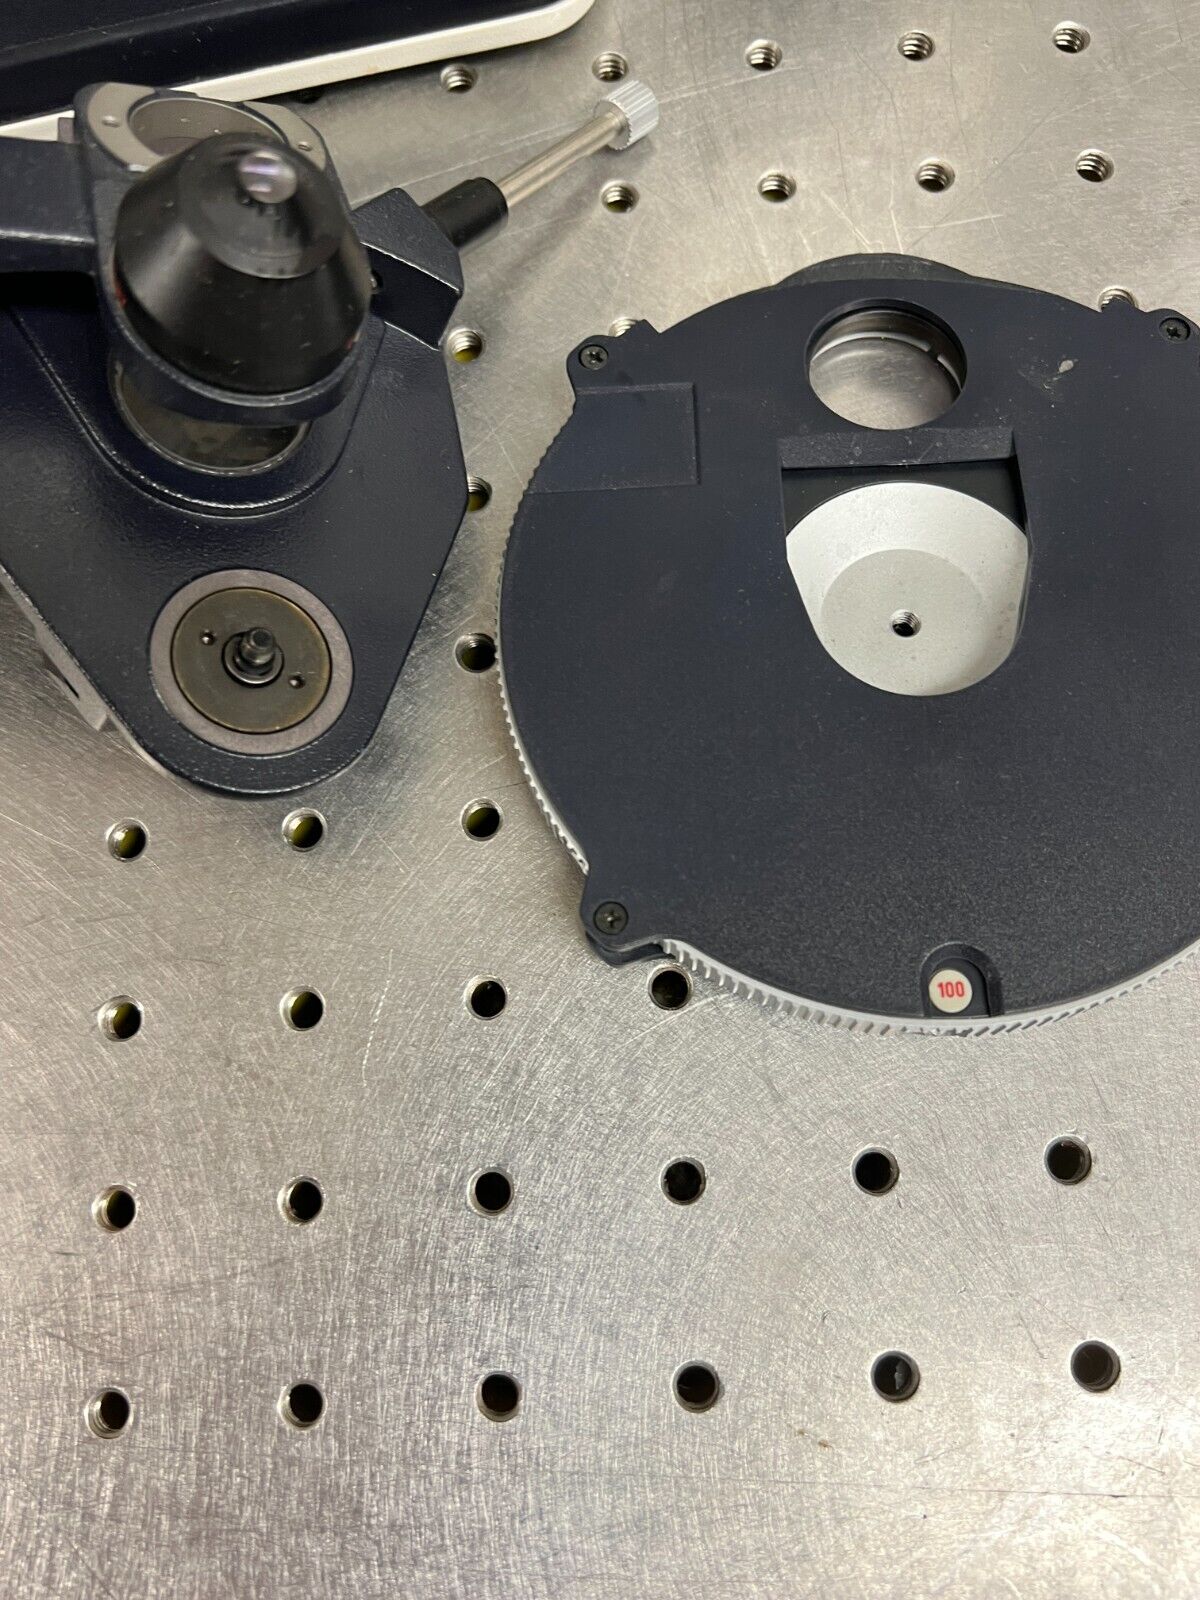 Leica DMR E Nomarski DIC Fluoresence Phase Contrast Microscope + 10MP Camera